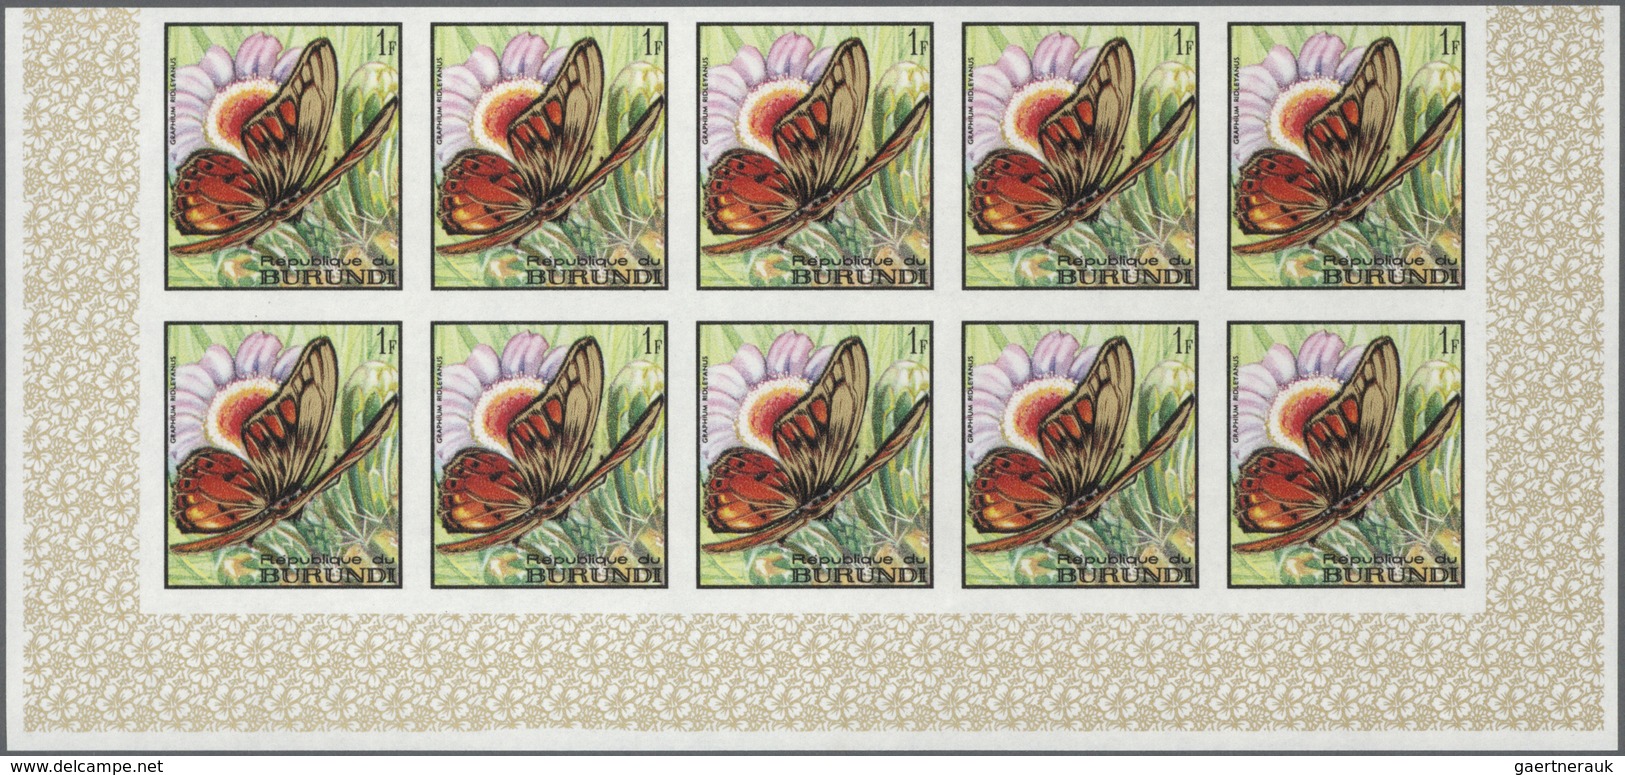 Burundi: 1968, Butterflies Complete Set Of 16 In IMPERFORATE Blocks Of Ten From Lower Margins, Mint - Nuovi